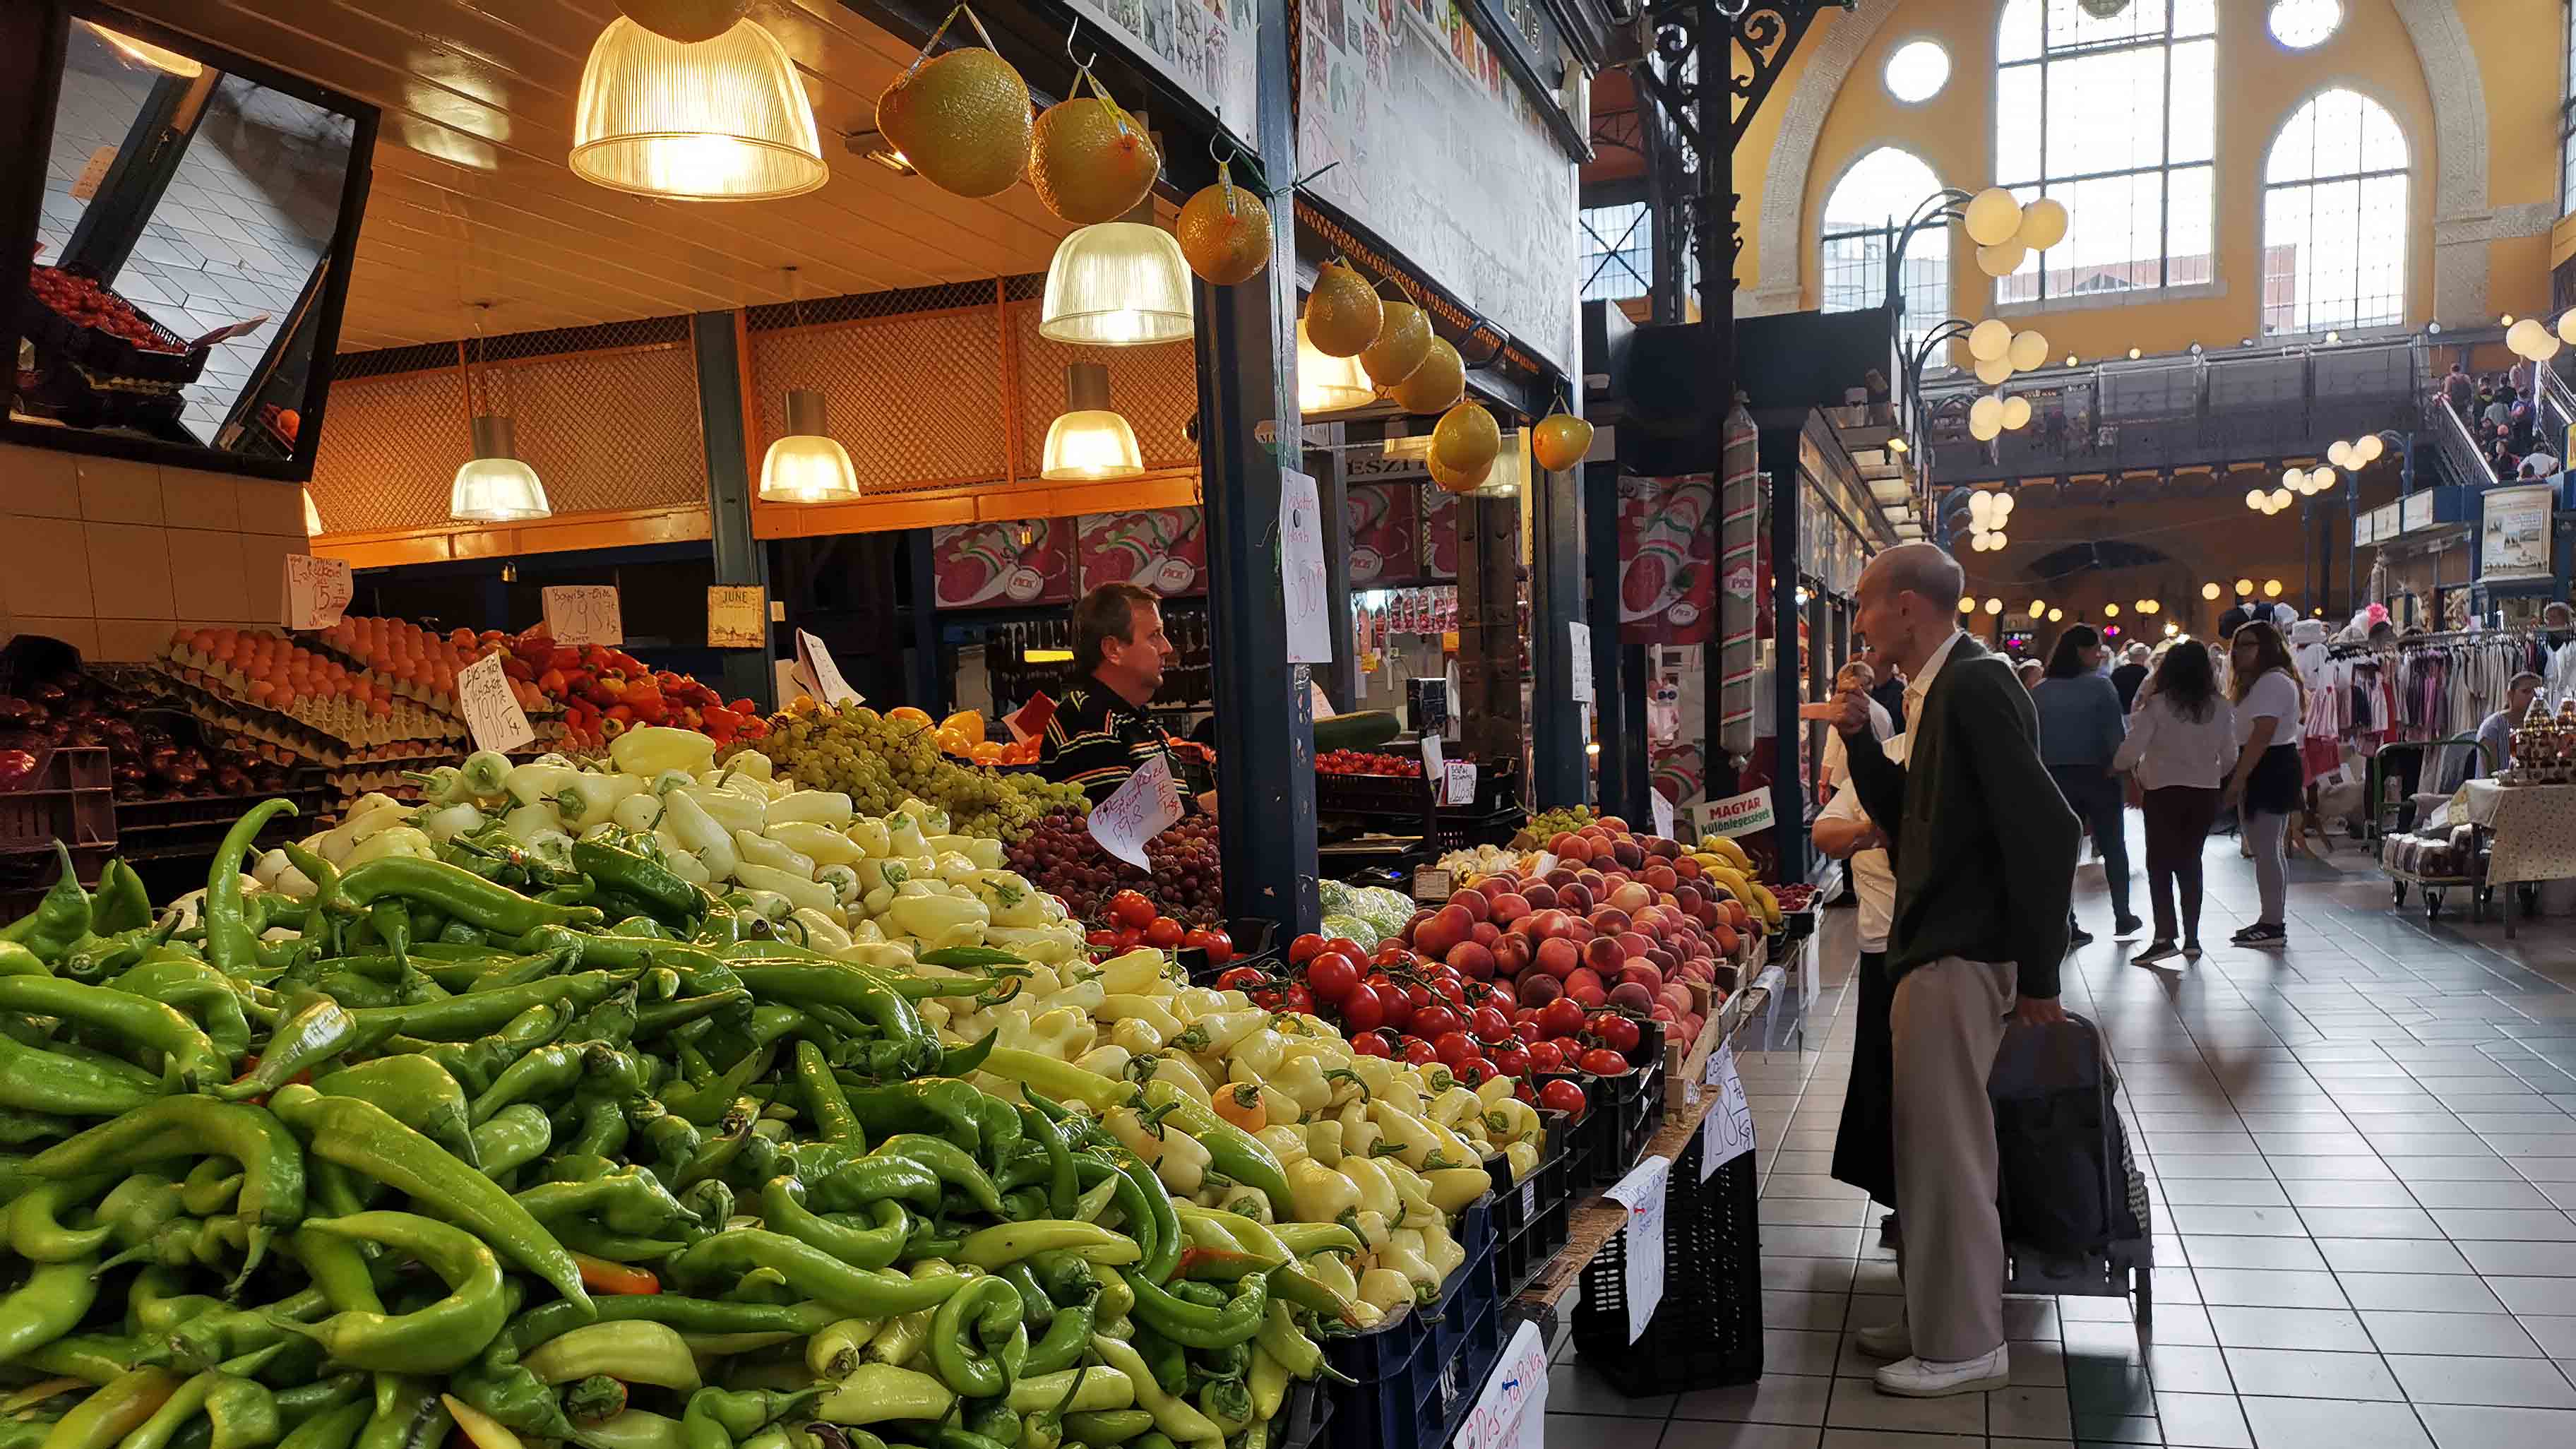 Velika tržnica Budimpešta Fővám tér trgovina povrćem voće